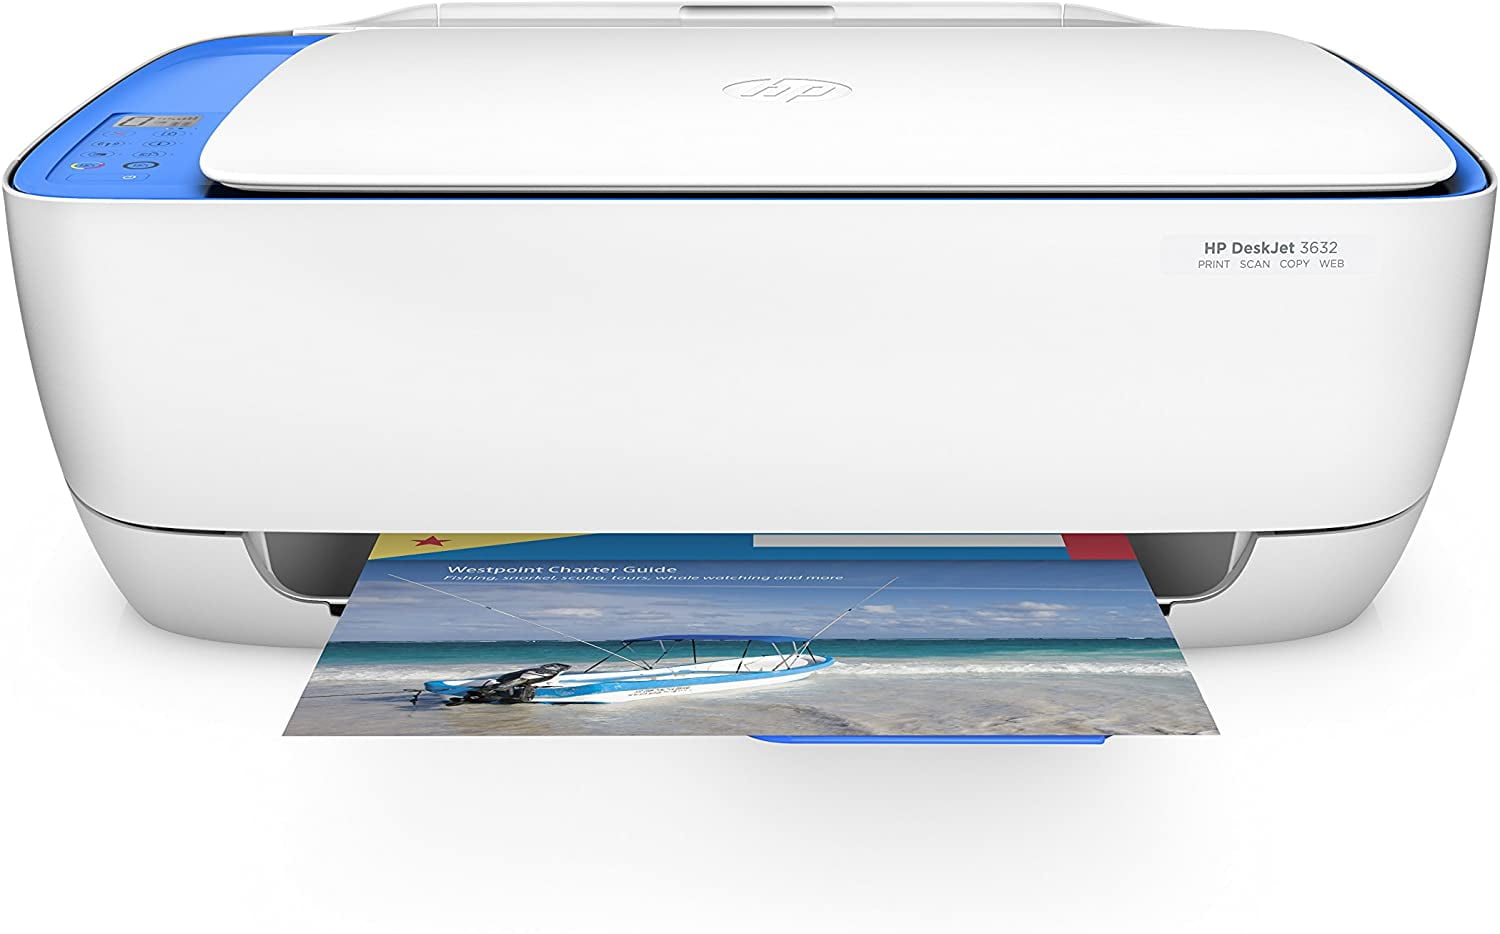 Pato Medicina Forense arrastrar HP DeskJet 3632 All-in-One Wireless Printer Print Copy Scan NO INK (Blue) -  Renewed - Walmart.com